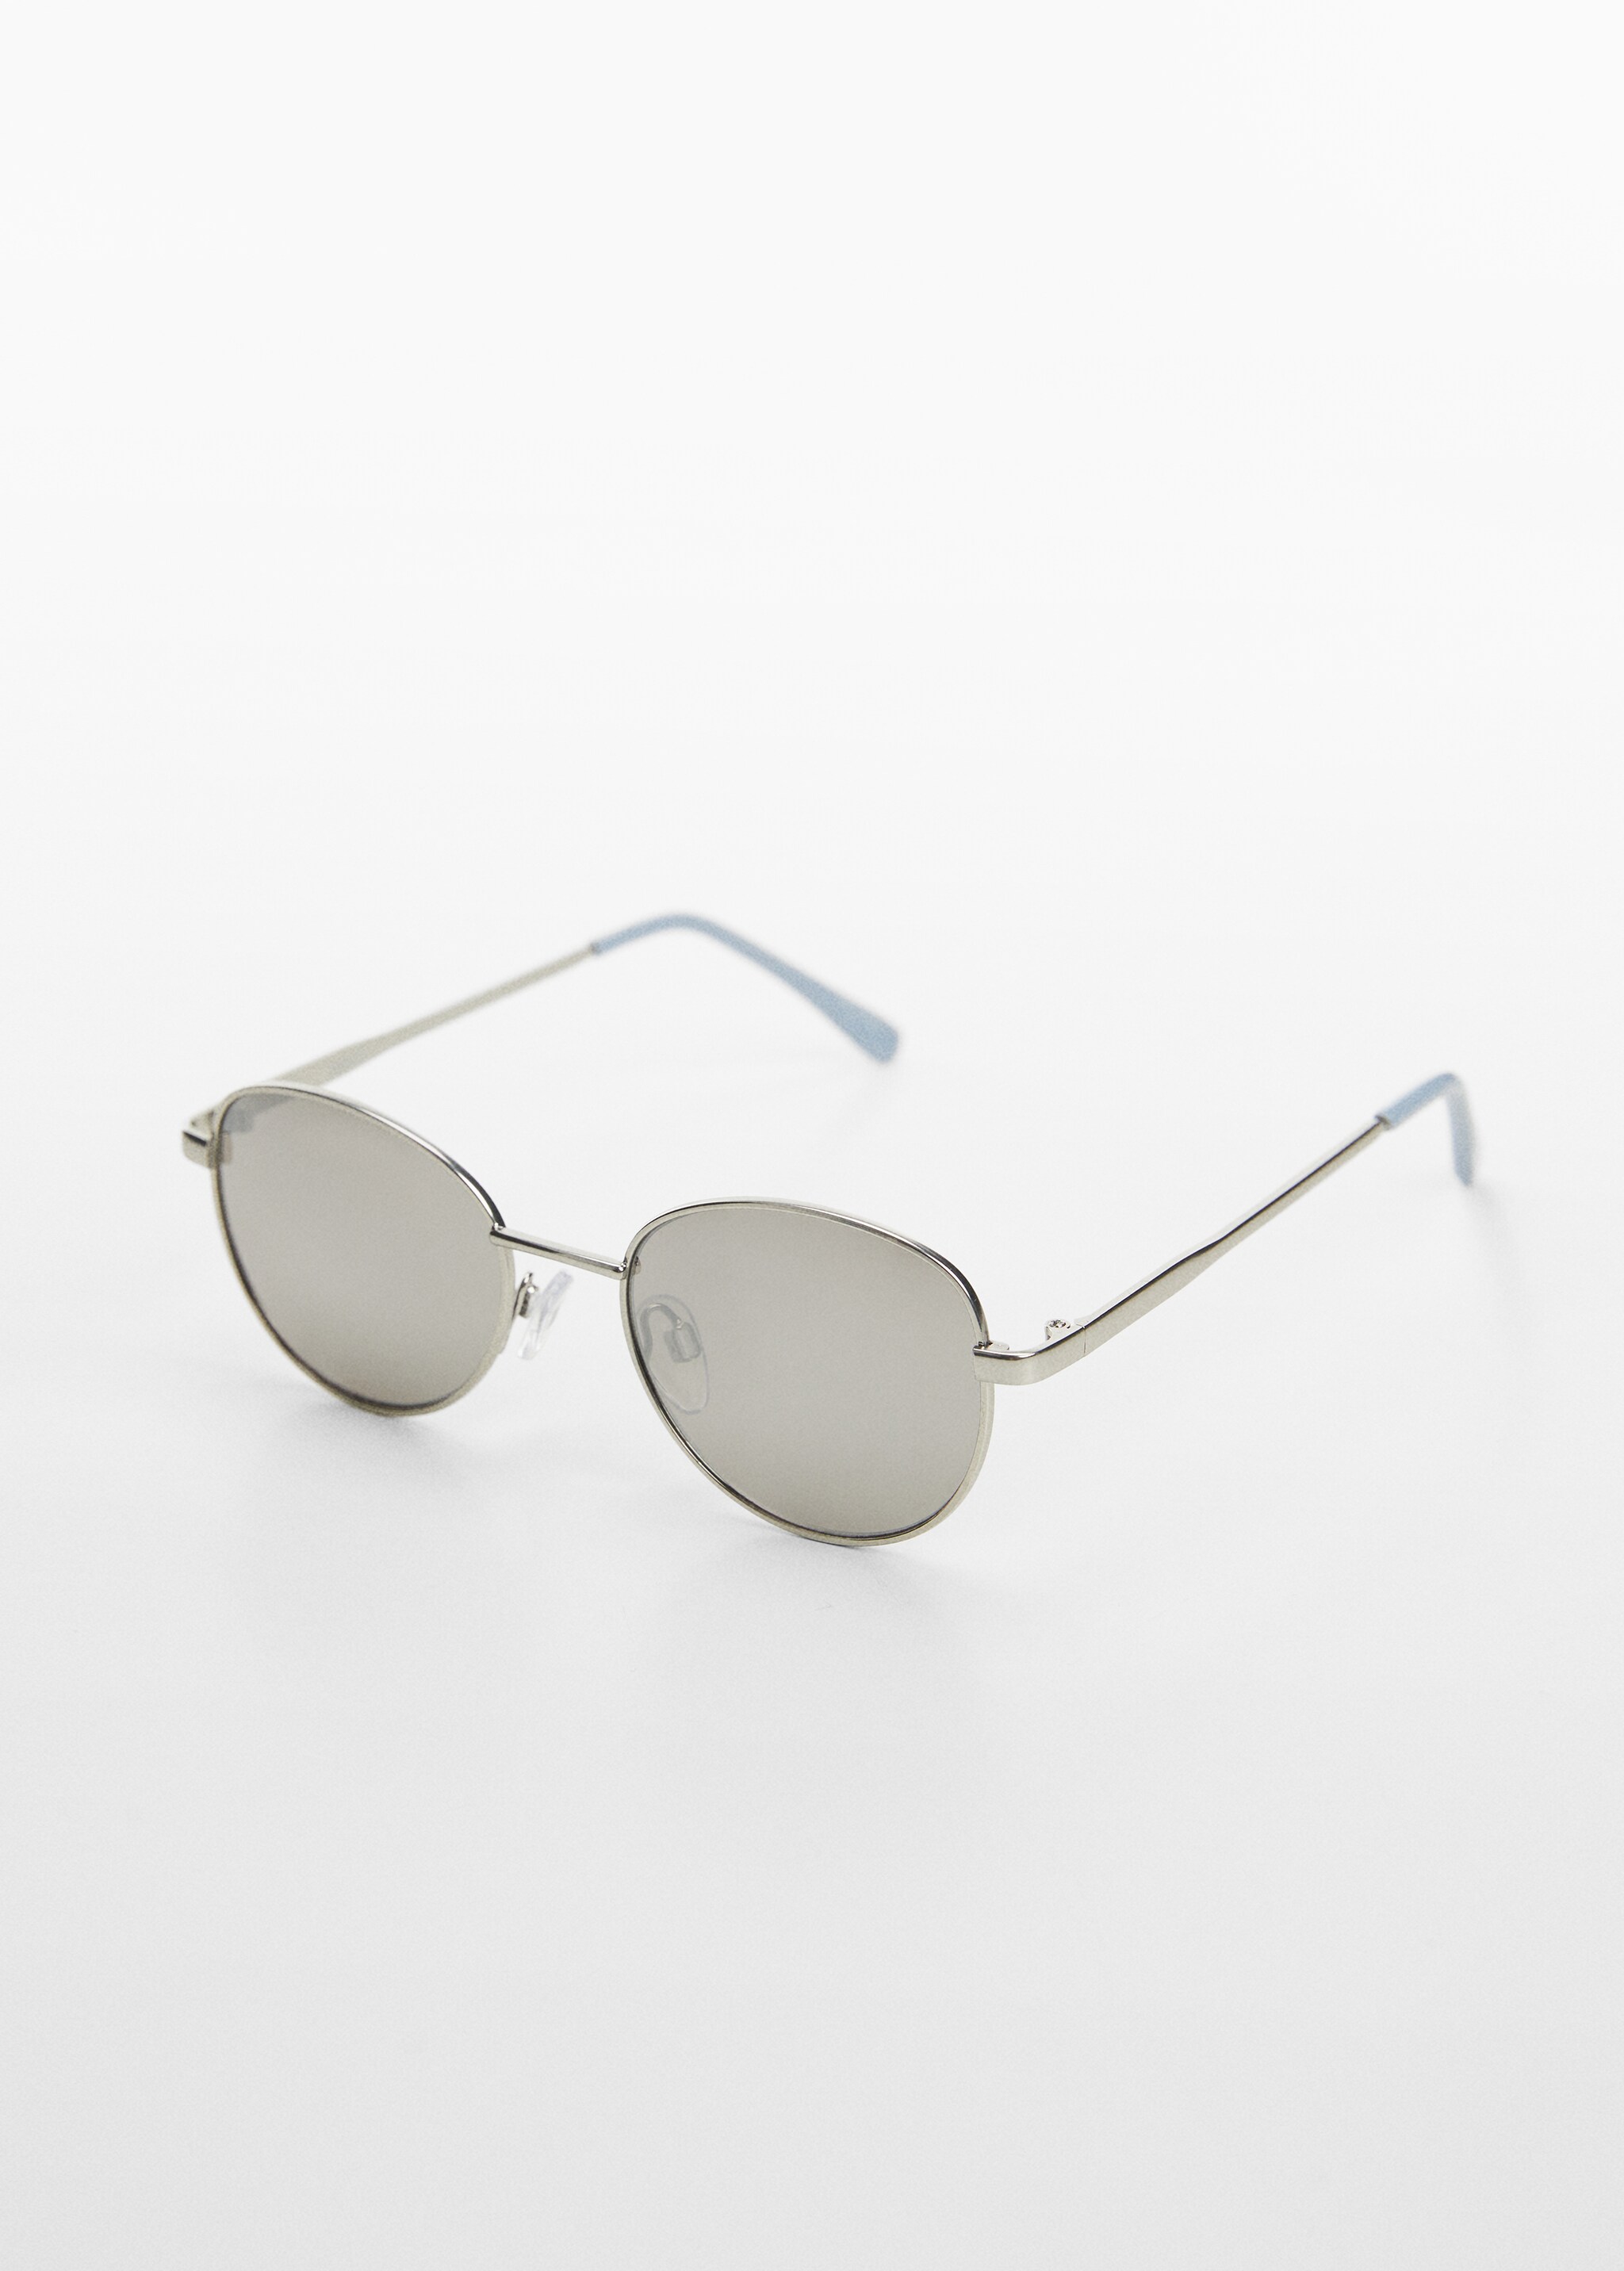 Aviator frame sunglasses - Medium plane